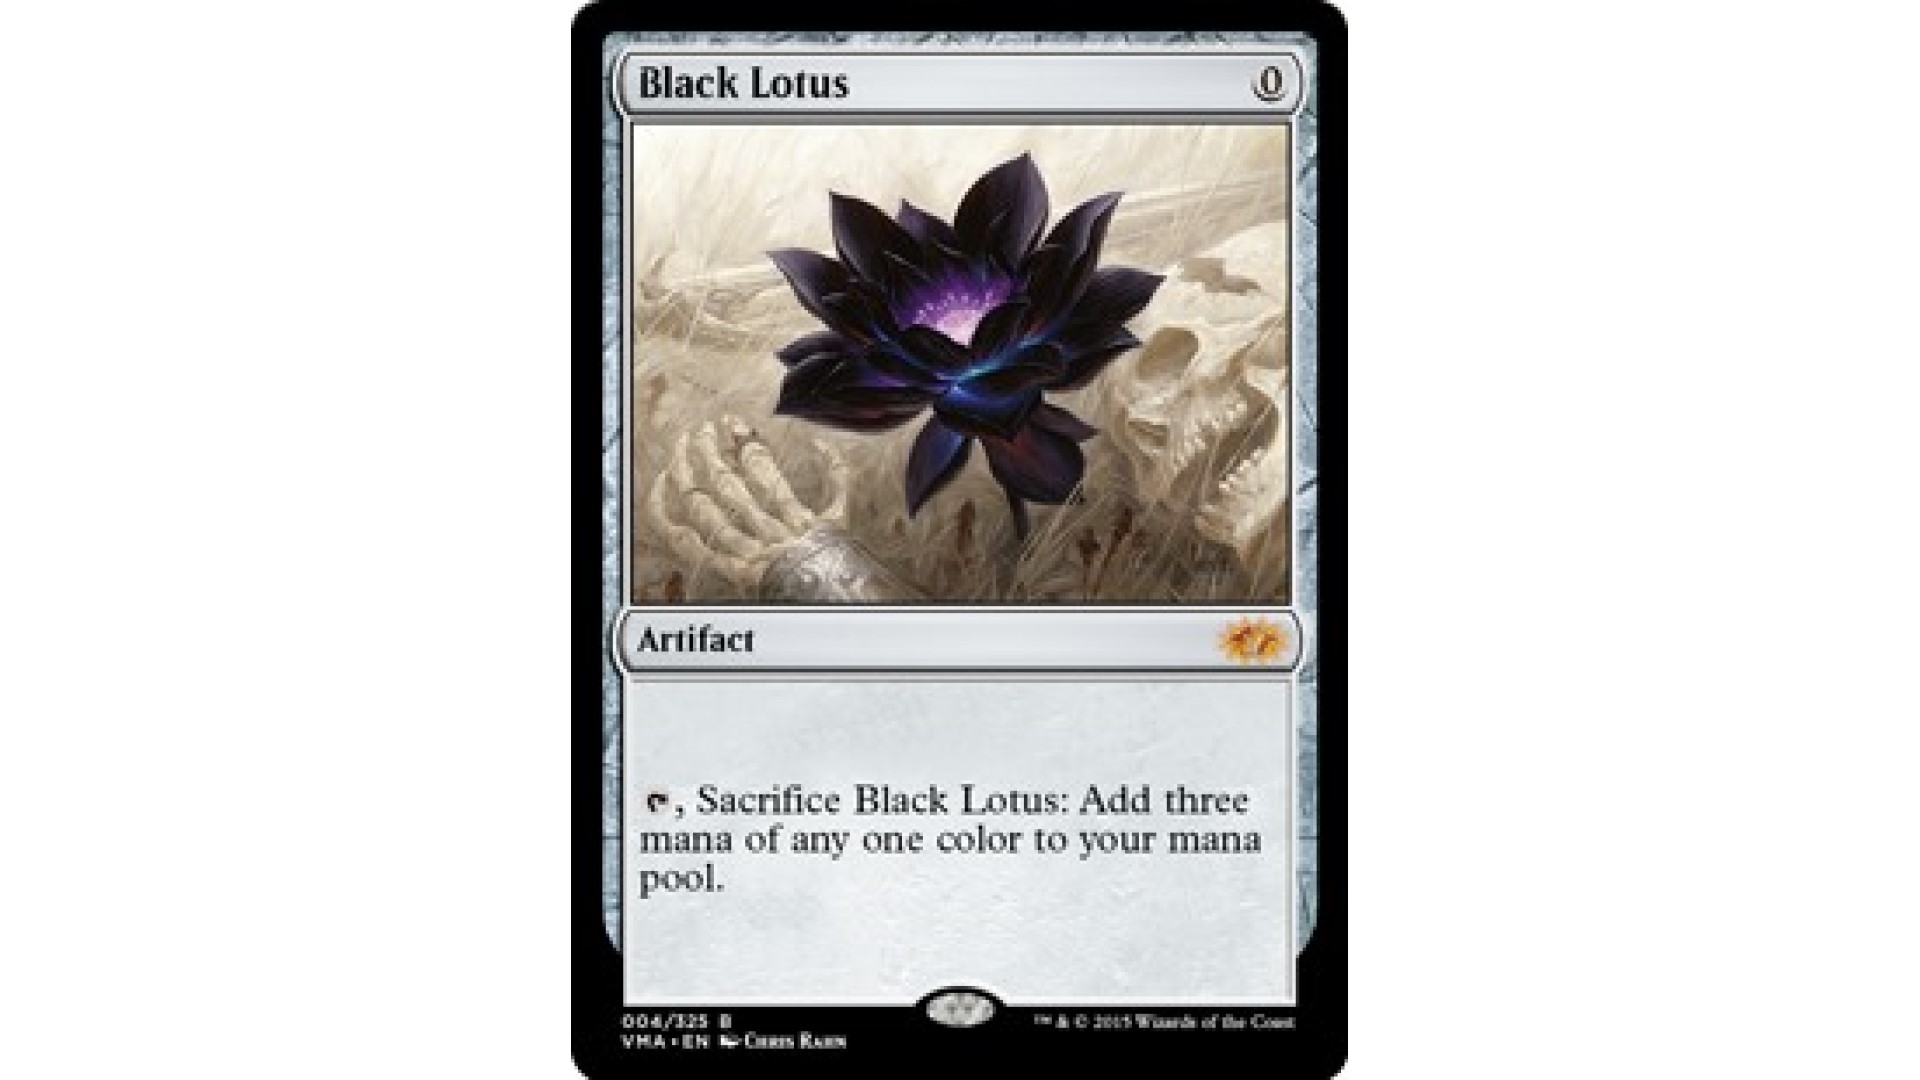 The MTG Power 9 card Black Lotus